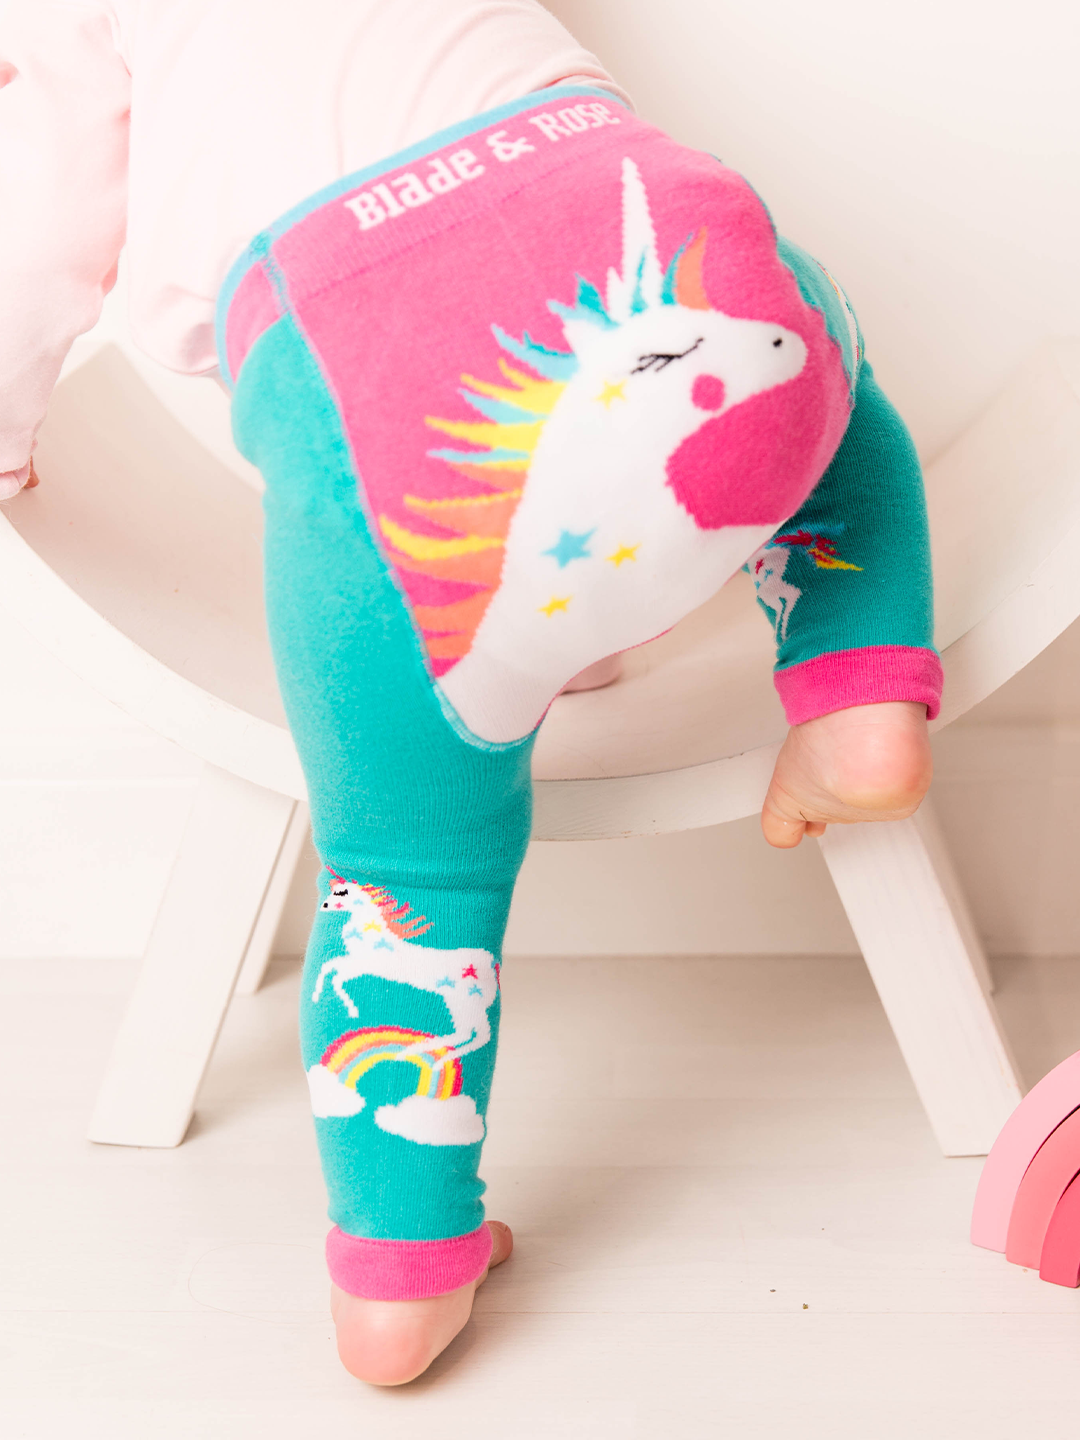 Pink Unicorn Leggings